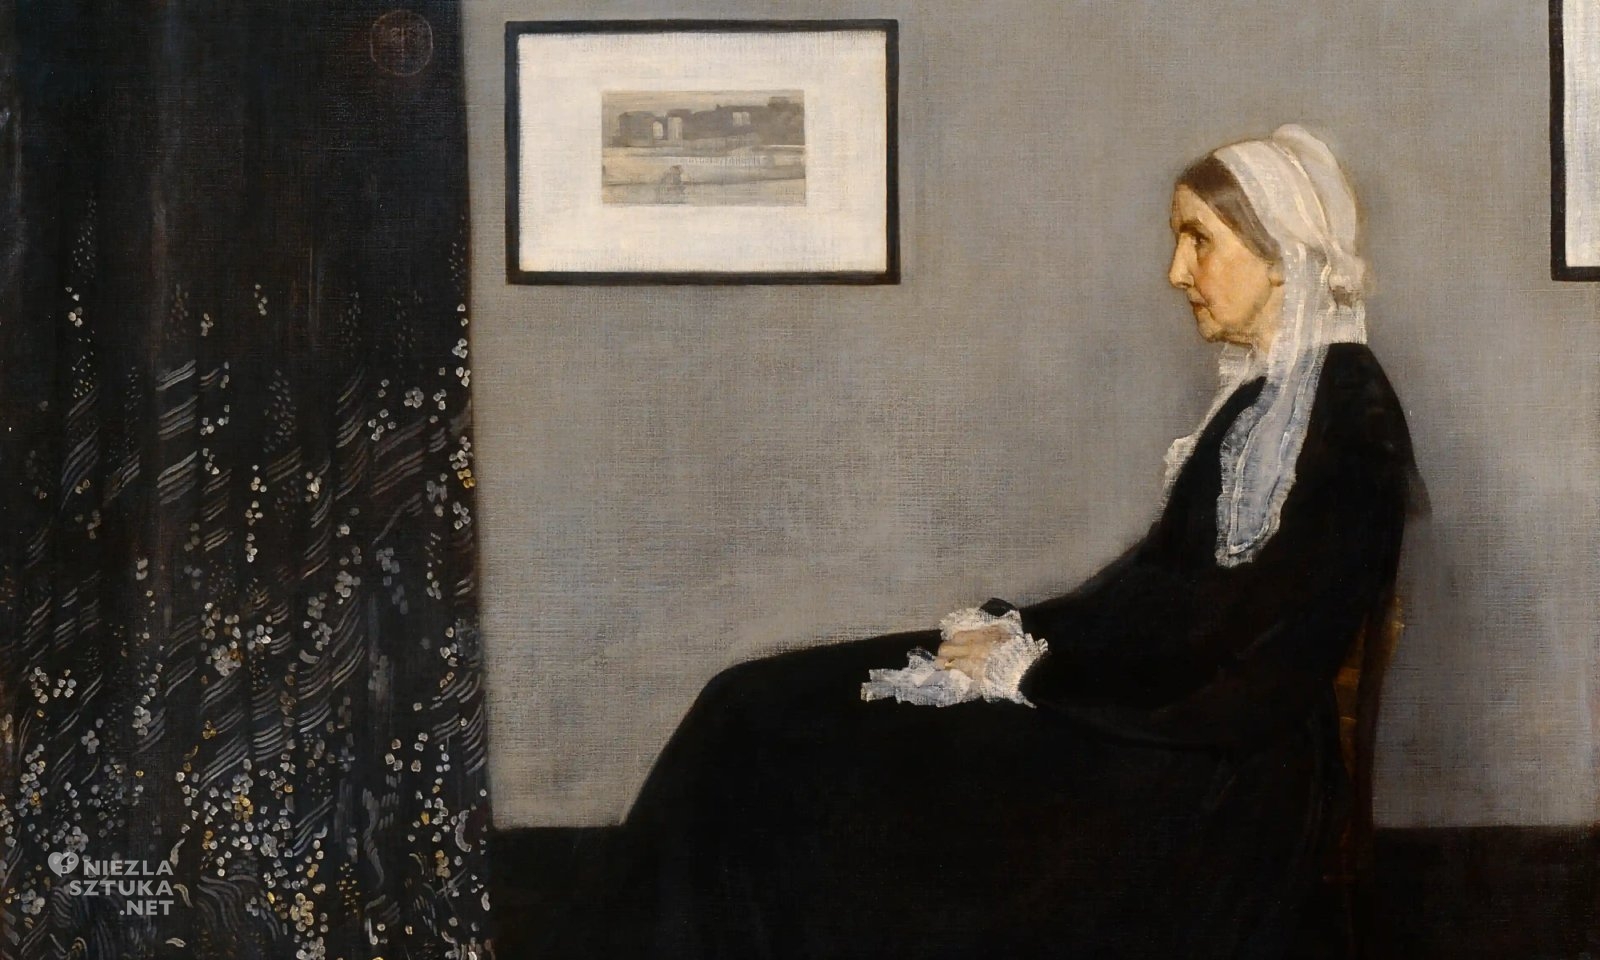 James Abbott McNeill Whistler, Matka Whistlera, Niezła sztuka